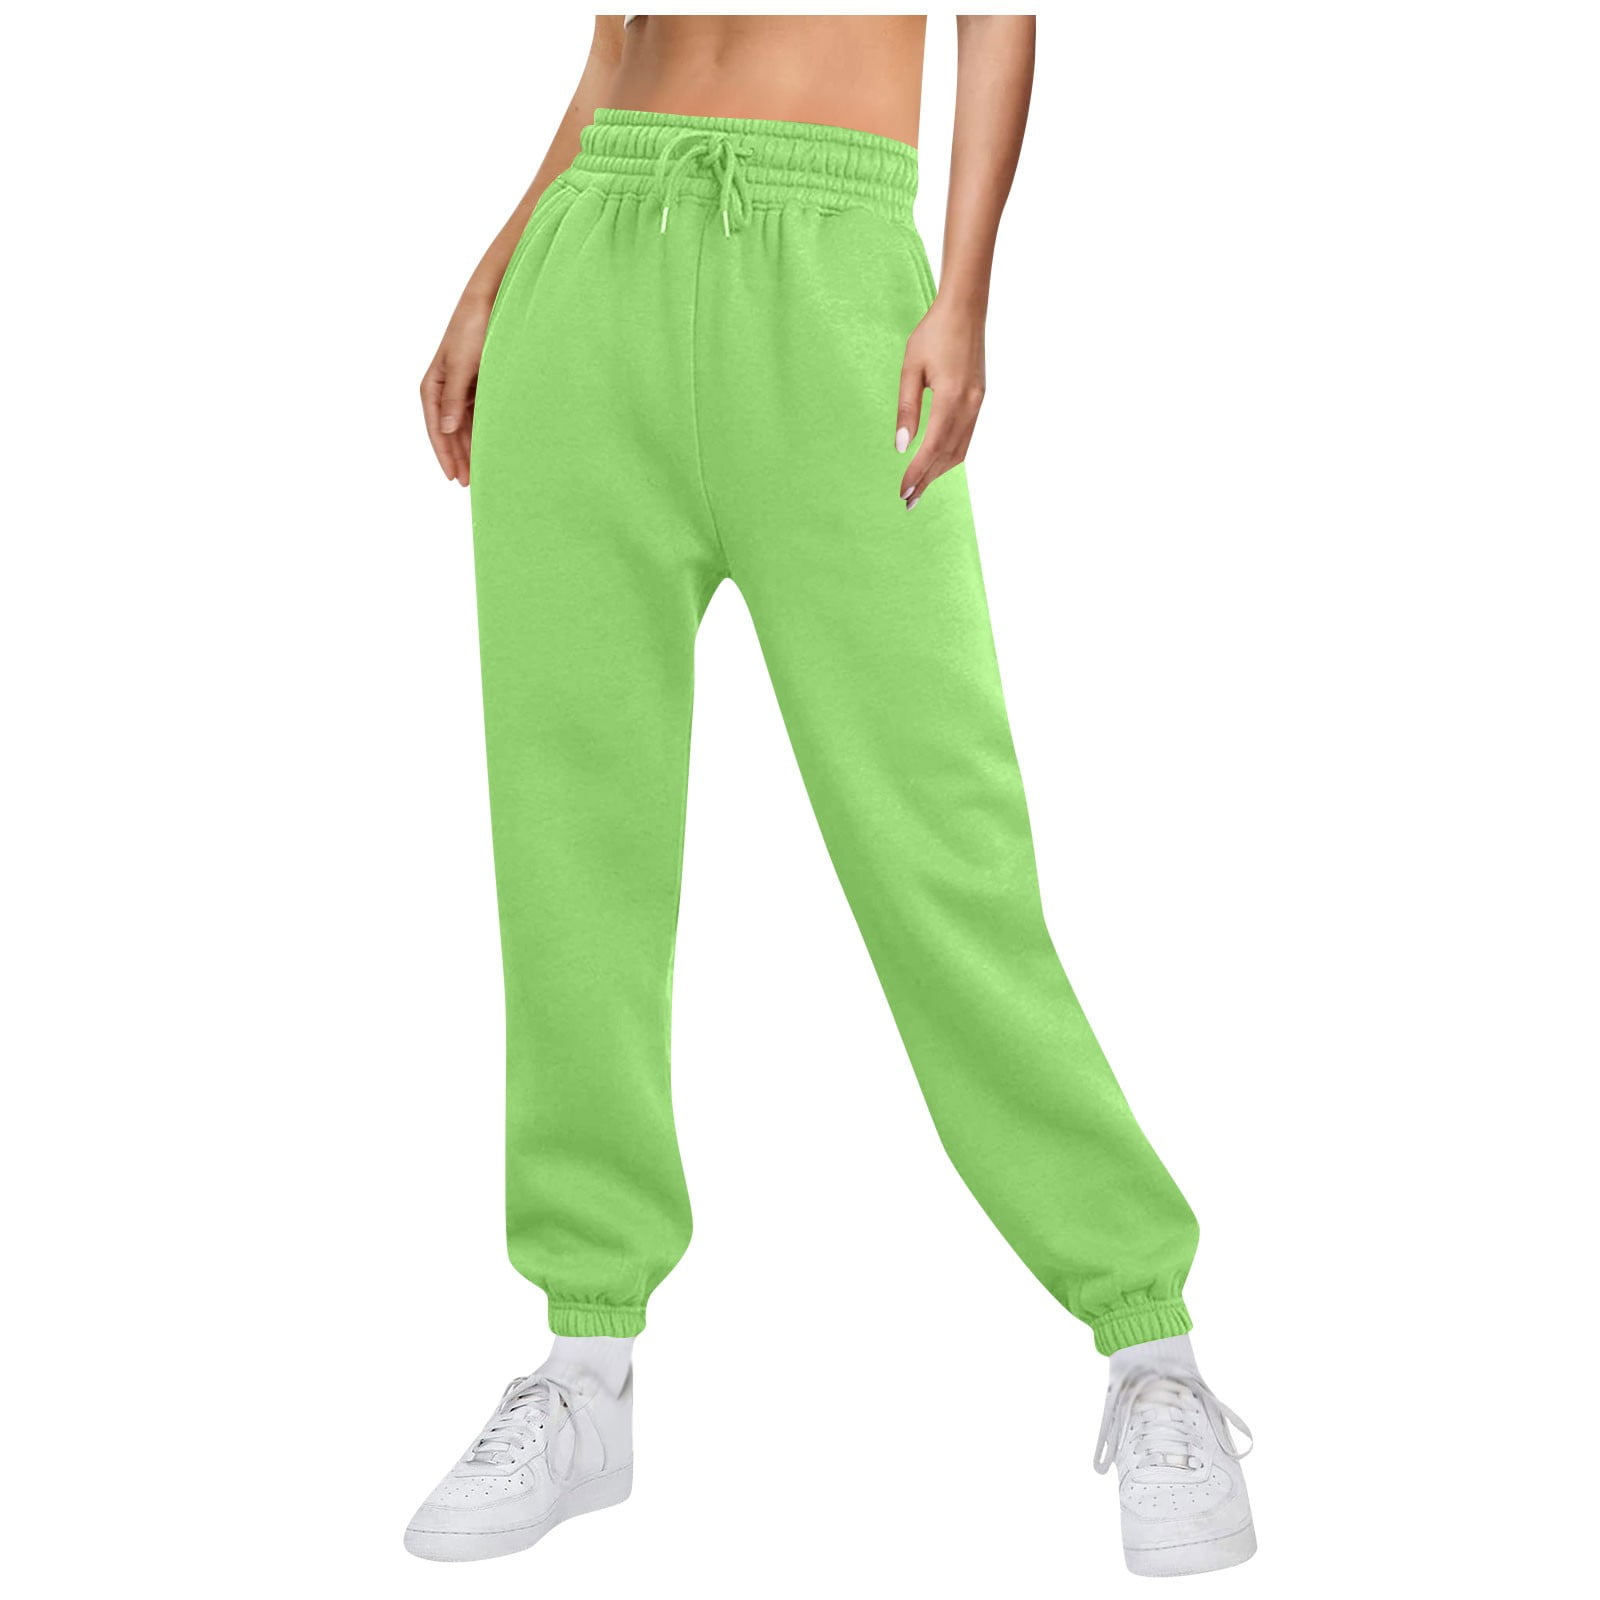 HHei_K Women's Fashion Sport Solid Color Drawstring Pocket Casual  Sweatpants Pants palazzo pants for women 